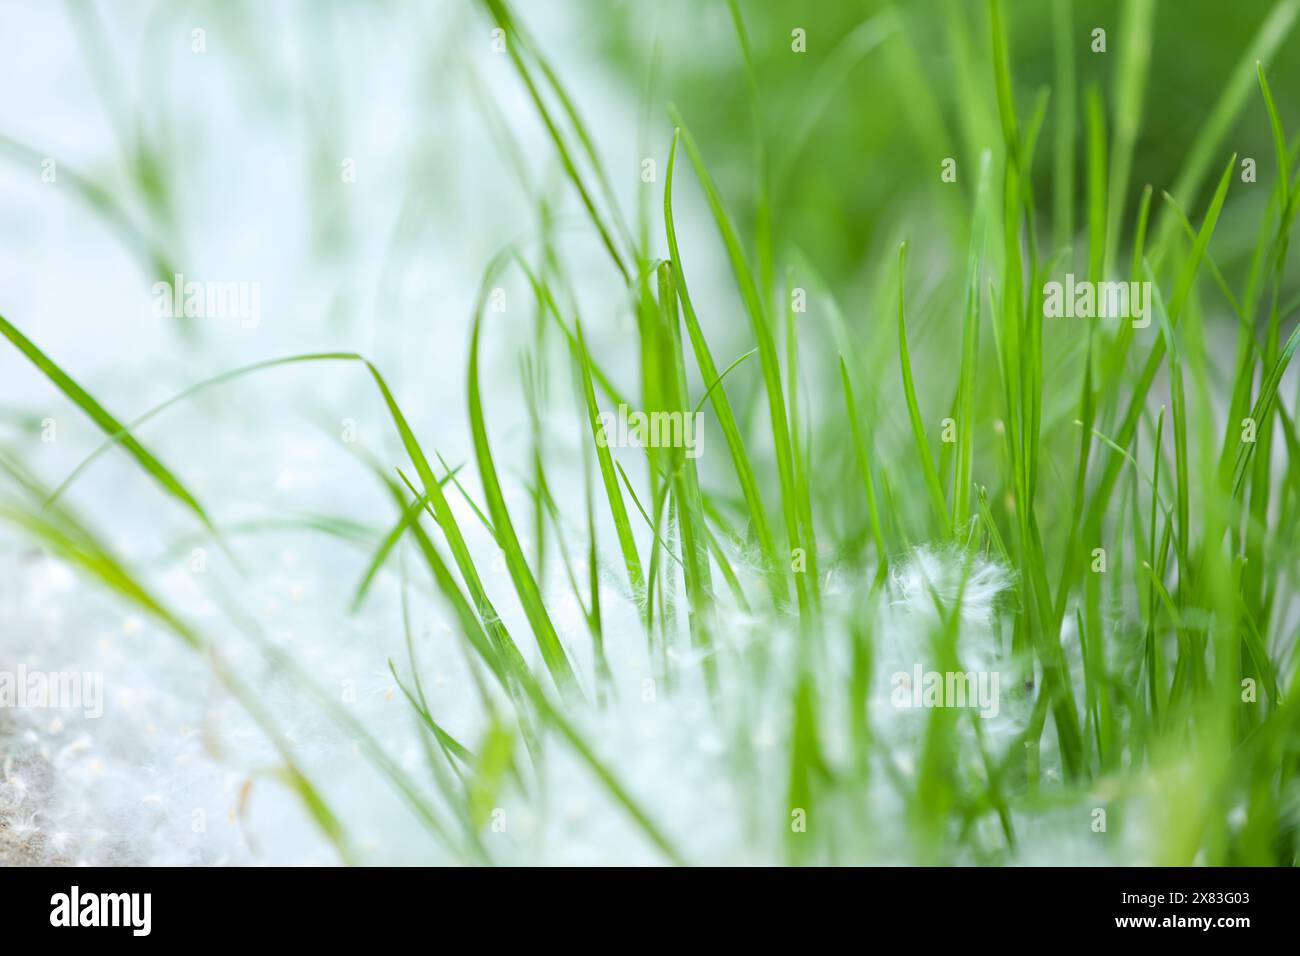 Poplar fluff covers the green grass. Close-up, selectiv focus, horizontal. Stock Photo